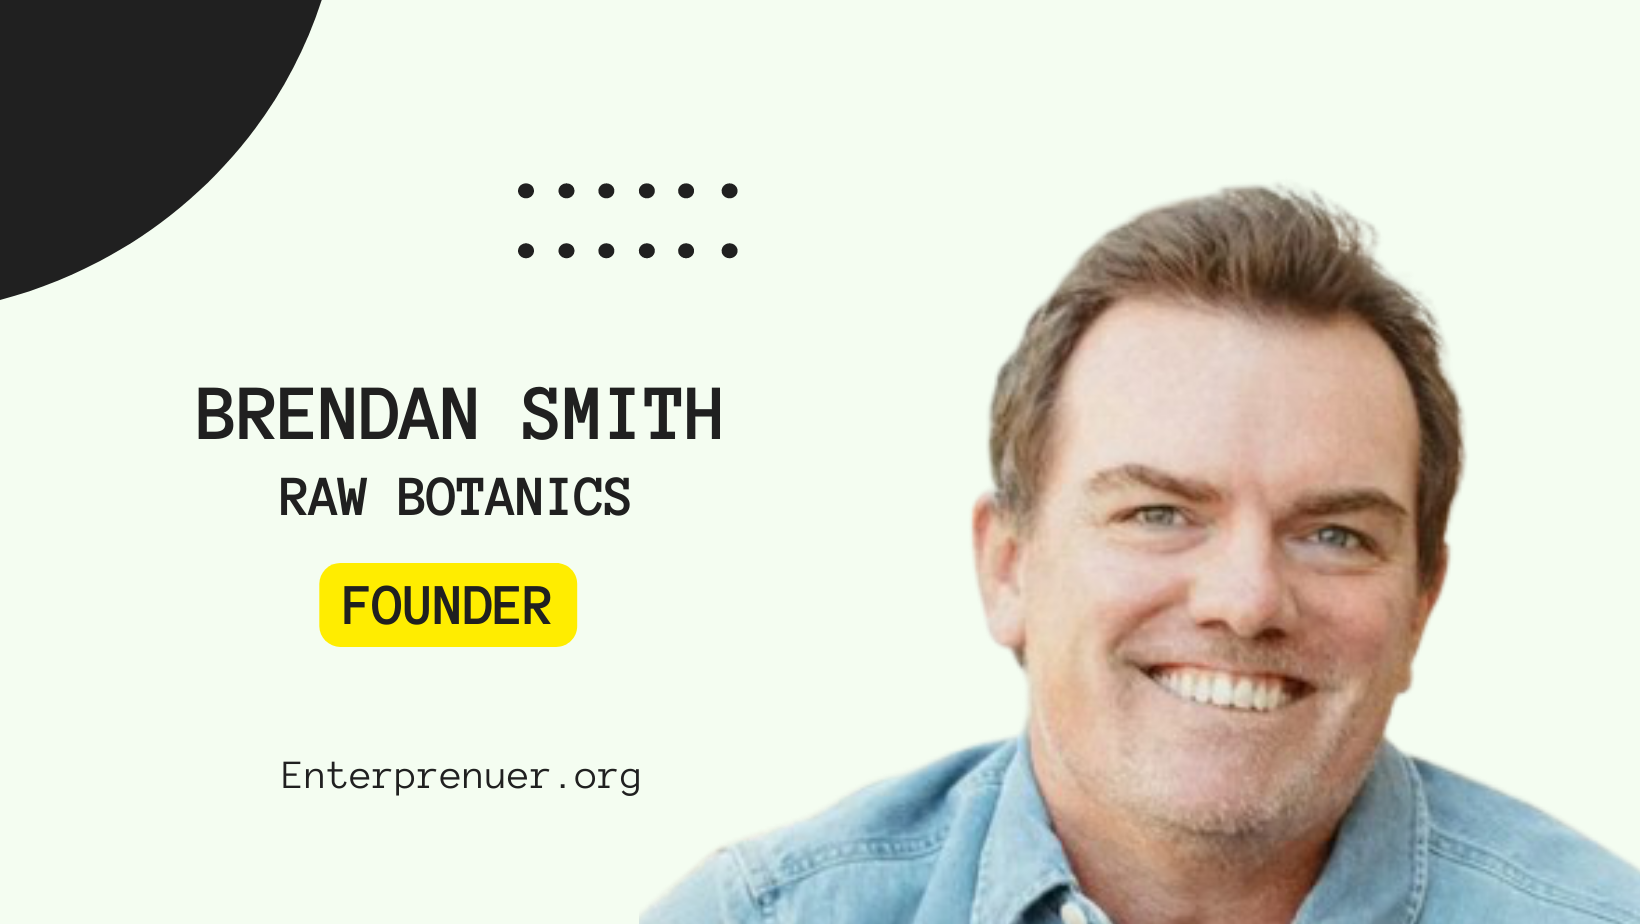 Brendan Smith Co-Founder of Raw Botanics